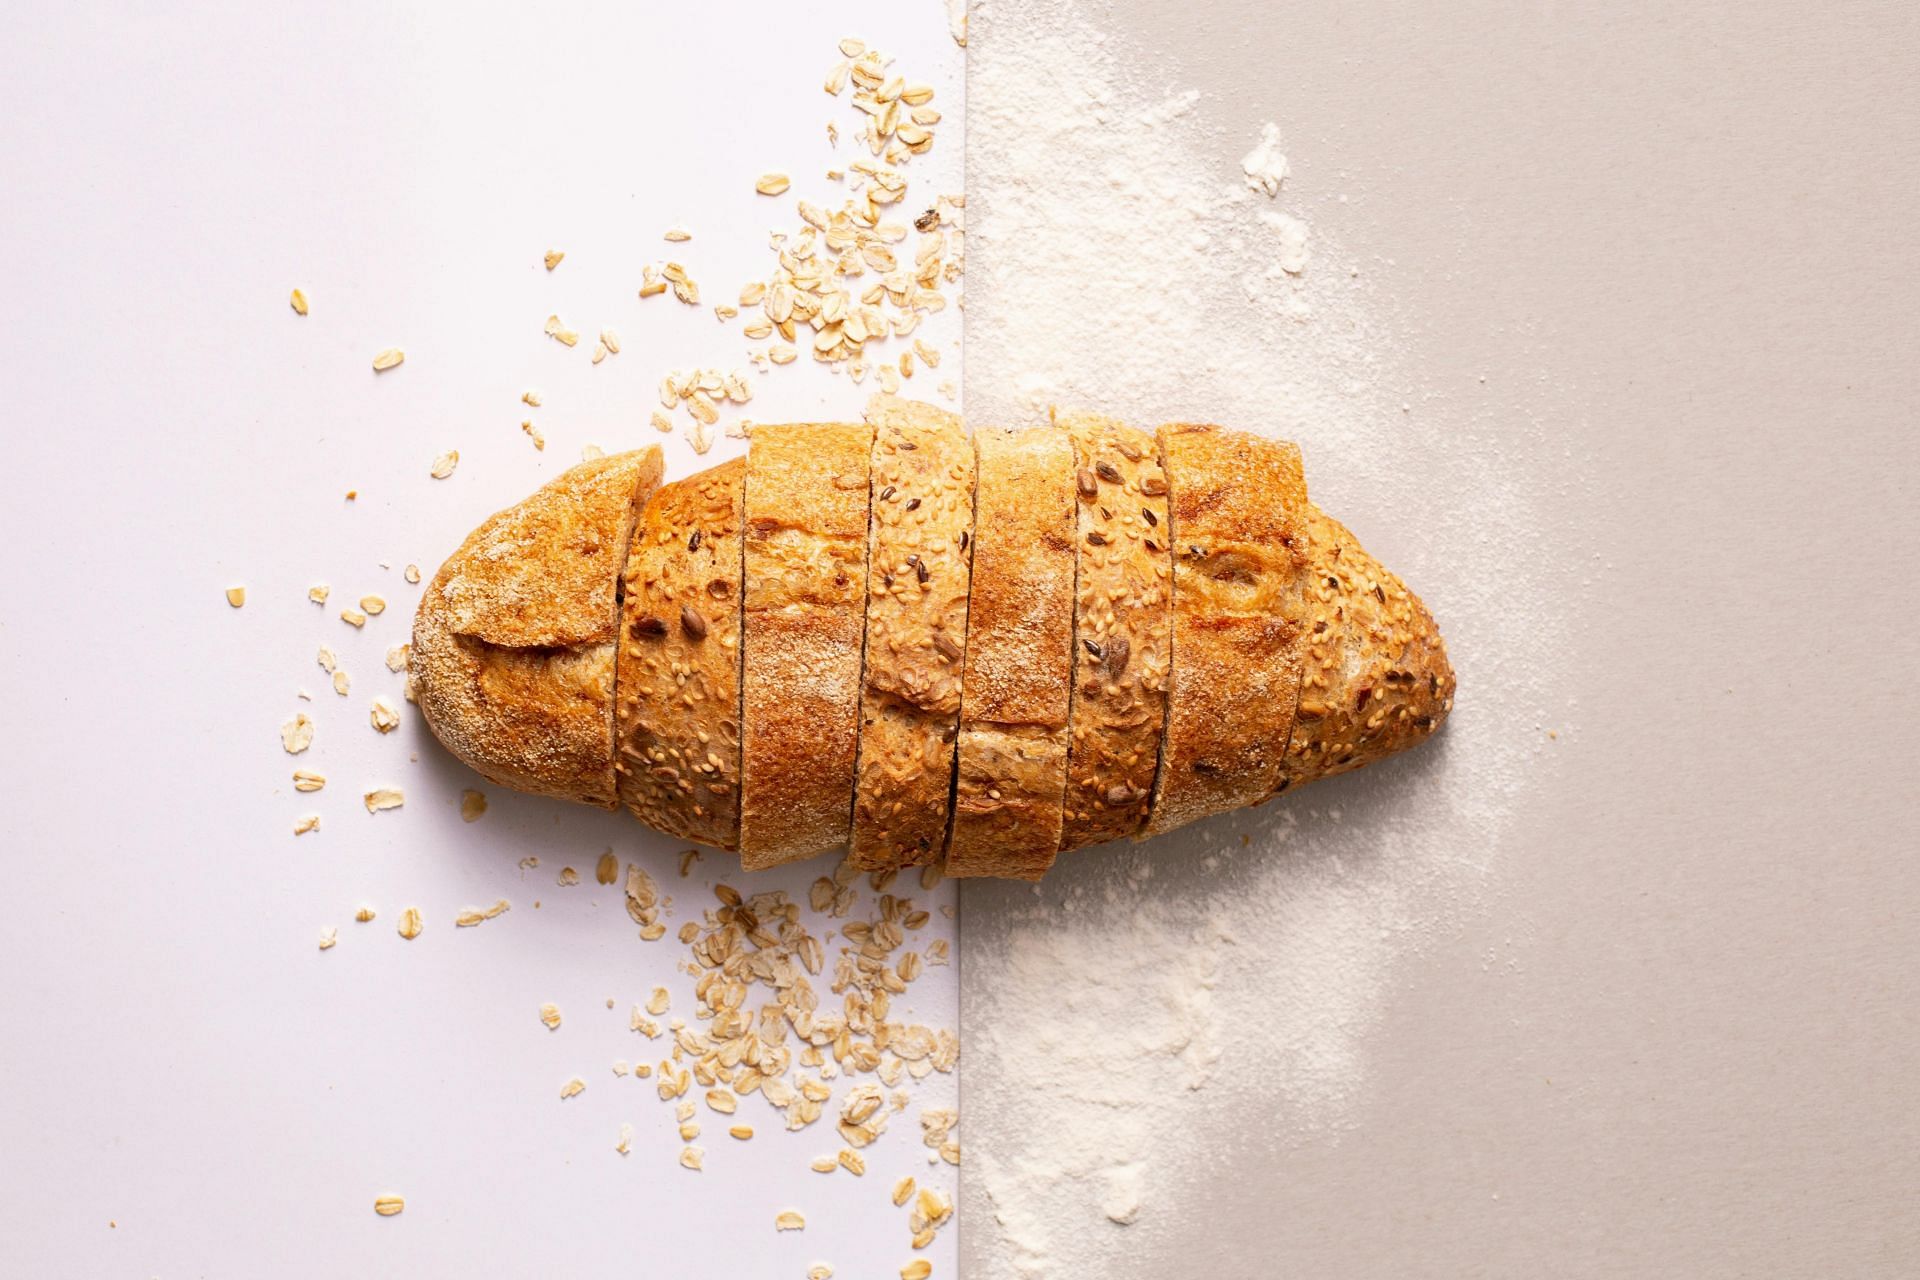 The healthiest flour alternatives (image sourced via Pexels / Photo by mariana)